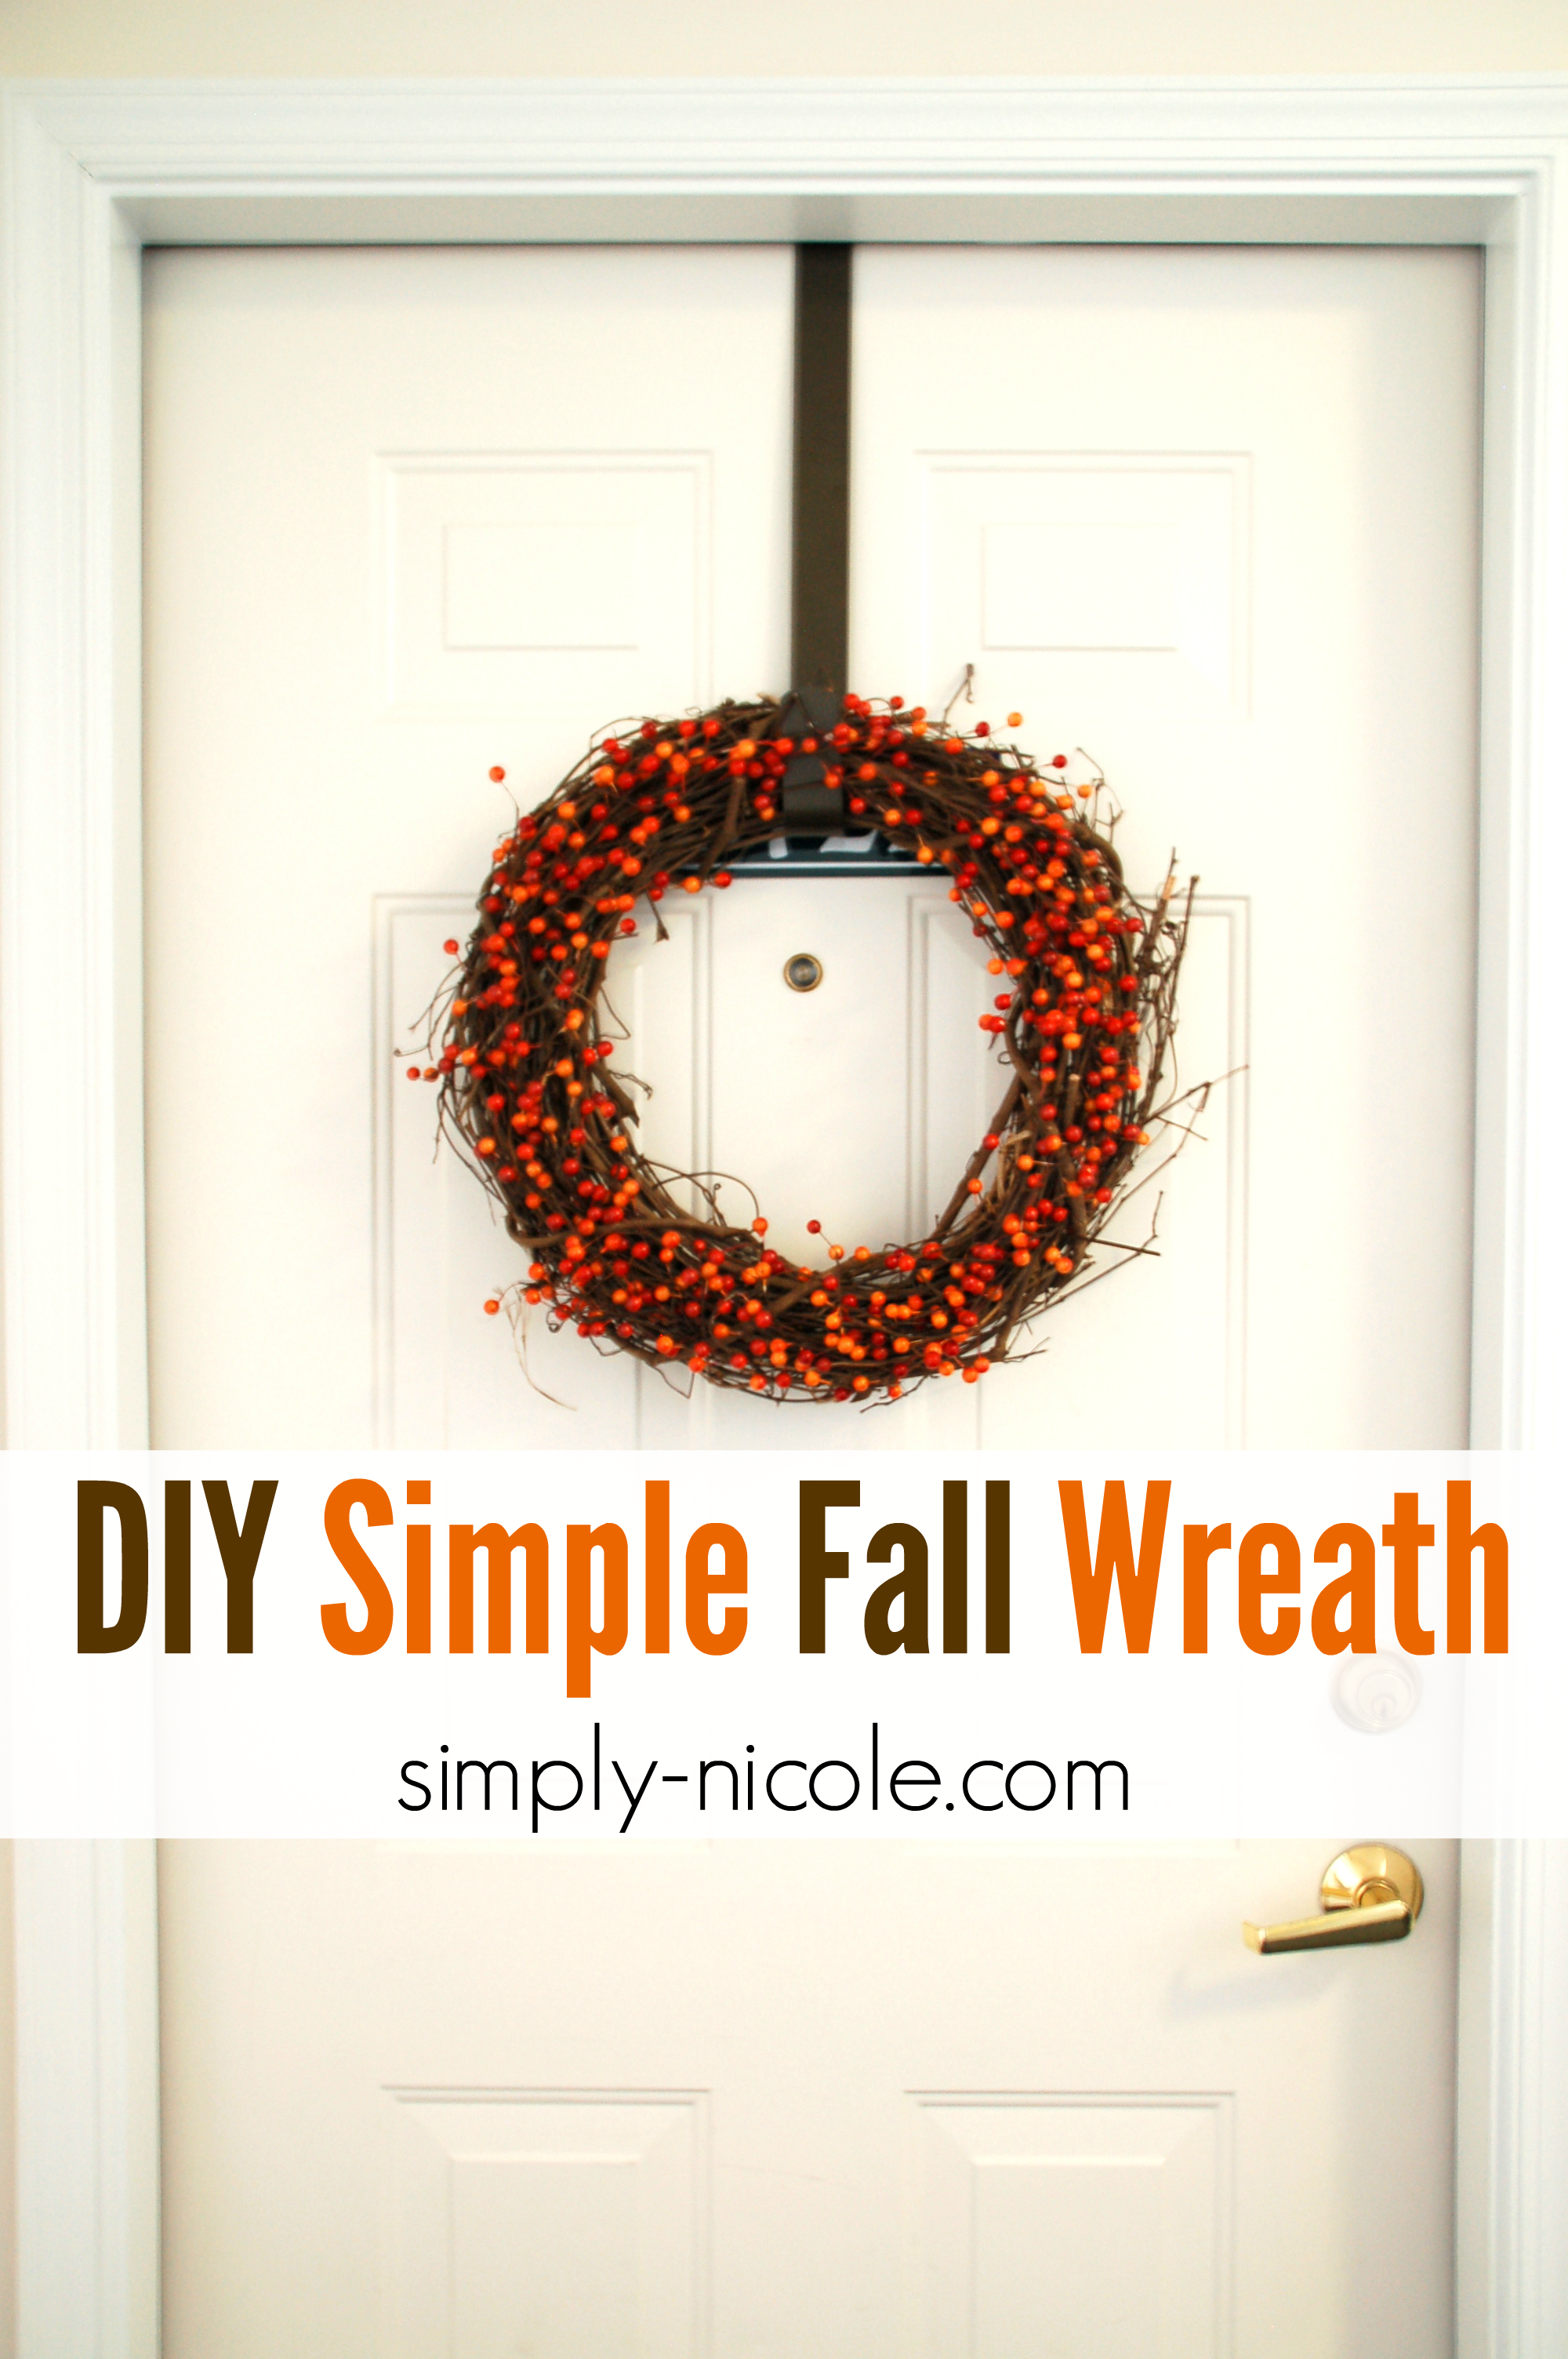 DIY Simple Fall Wreath at simply-nicole.com